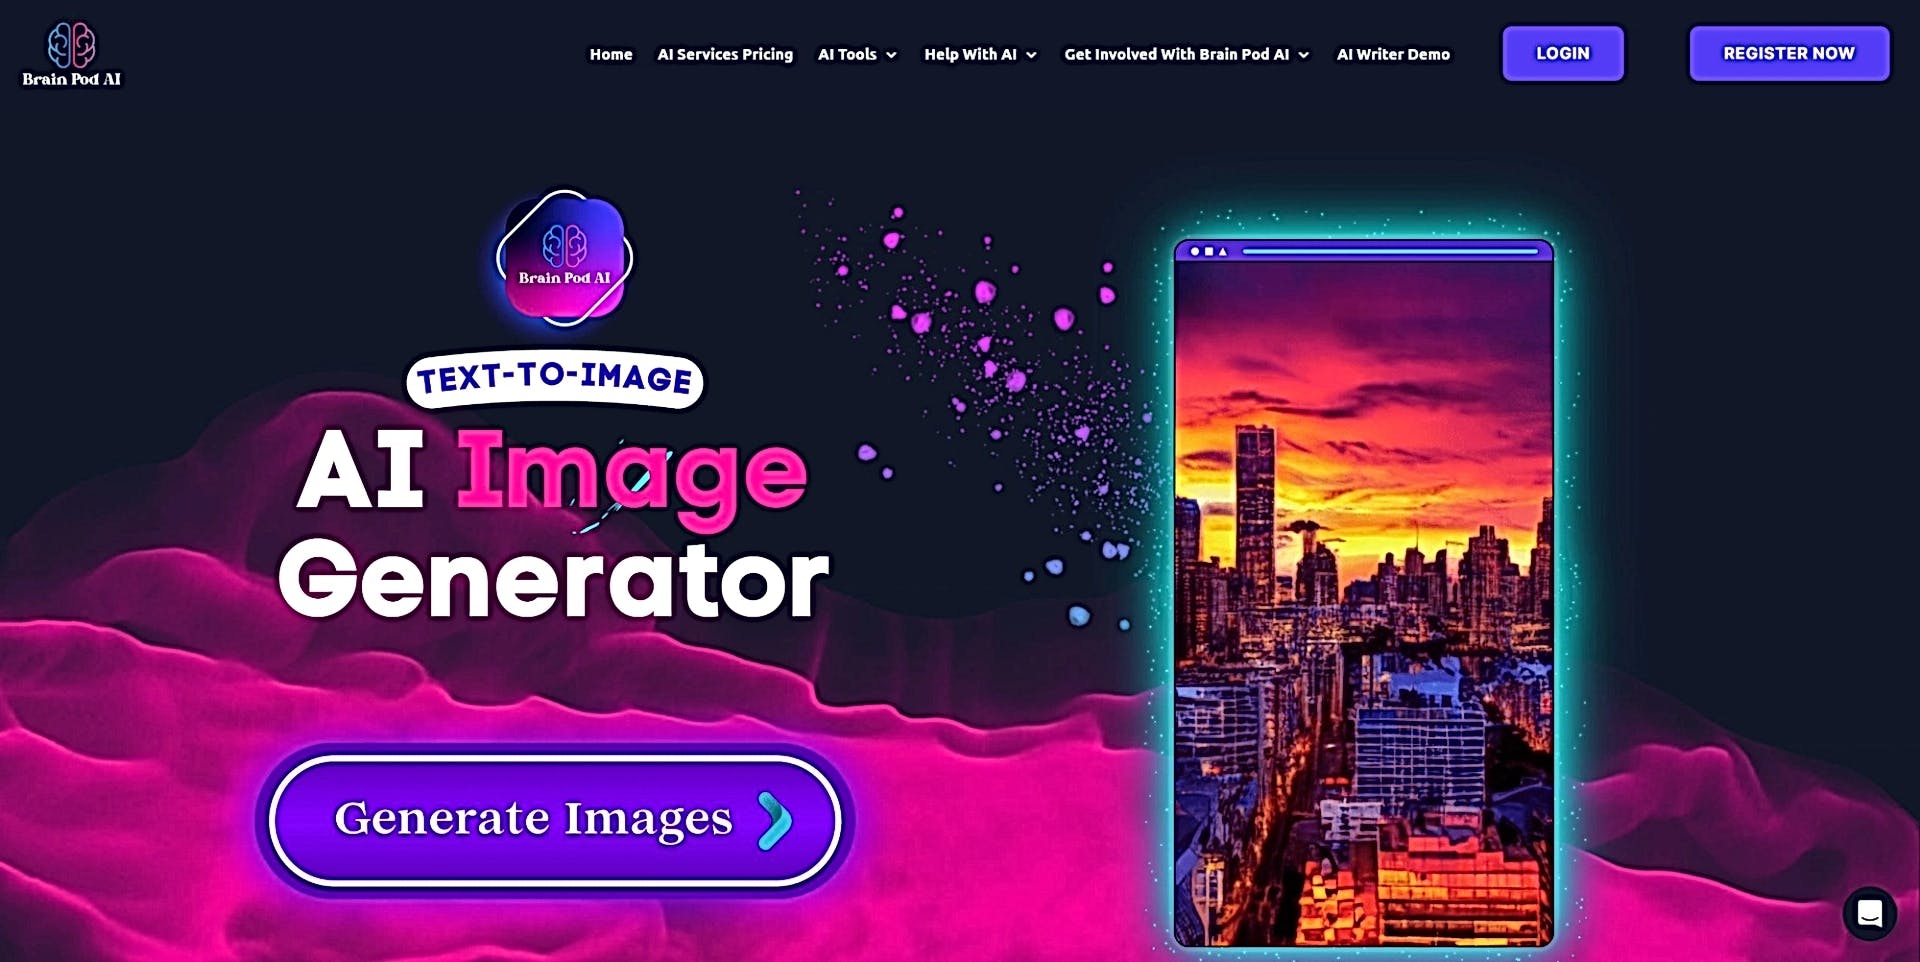 AI Image Generator featured